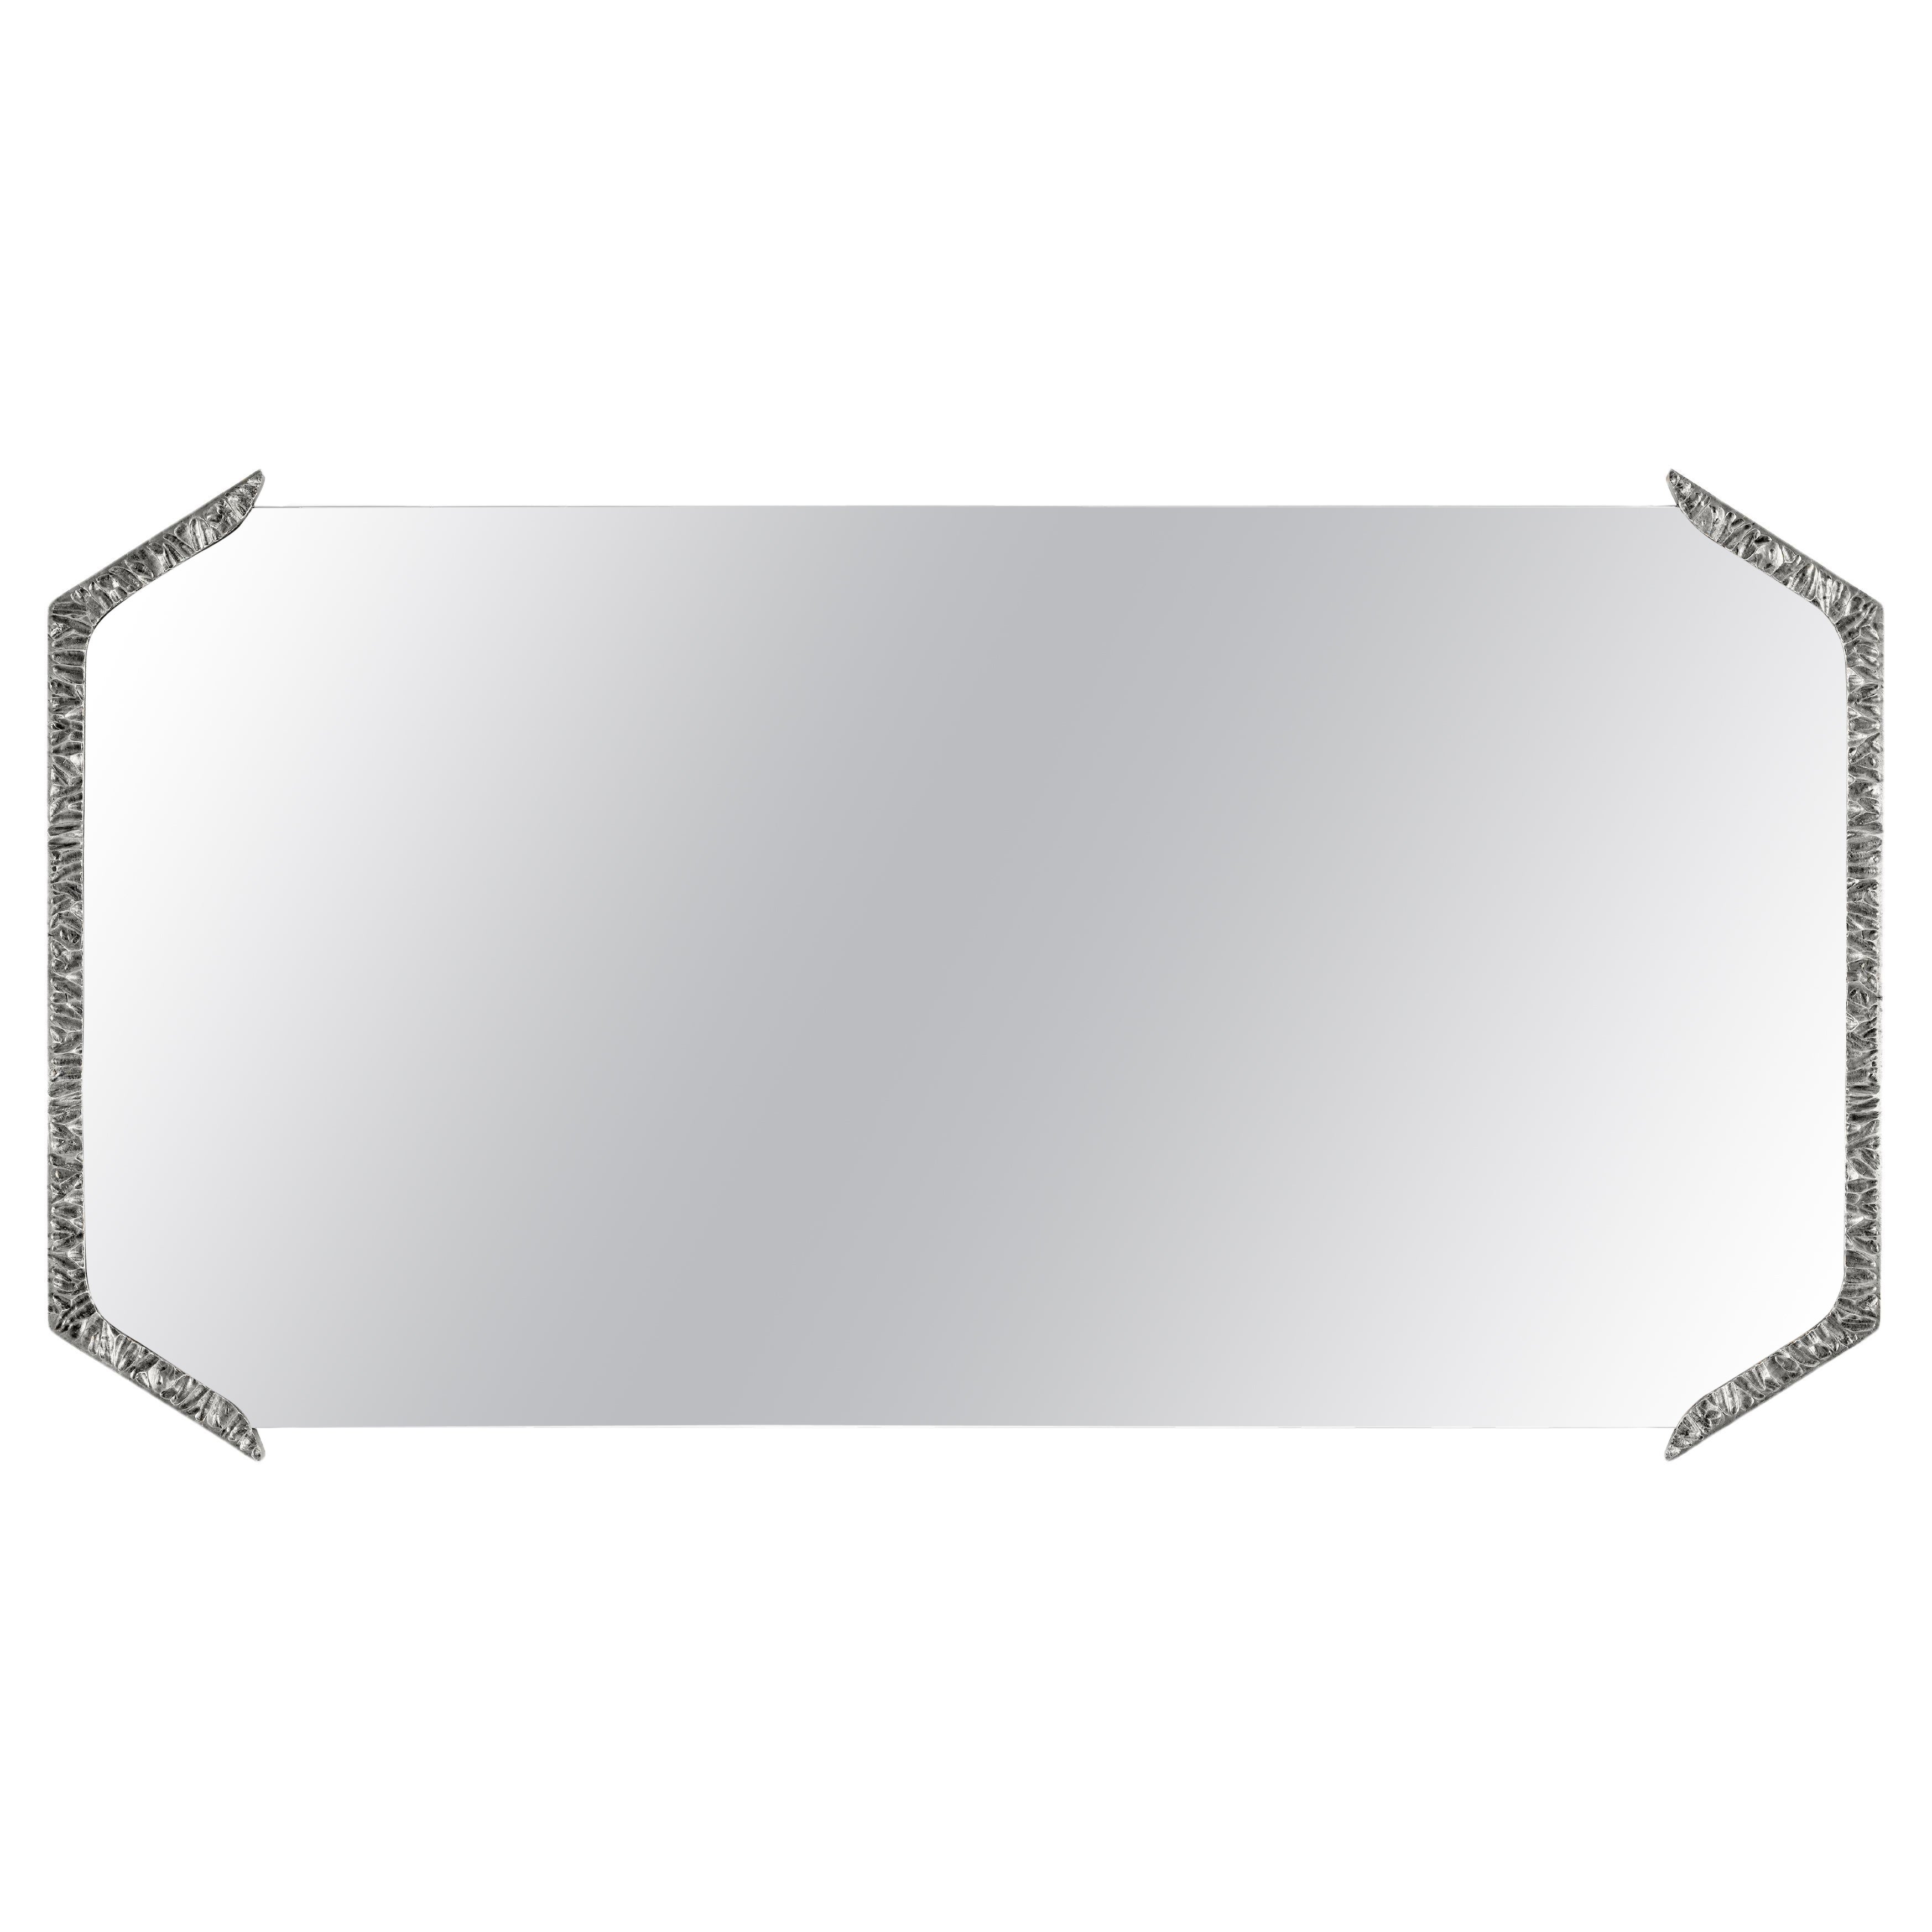 Alentejo Nickel Rectangular Mirror by InsidherLand For Sale